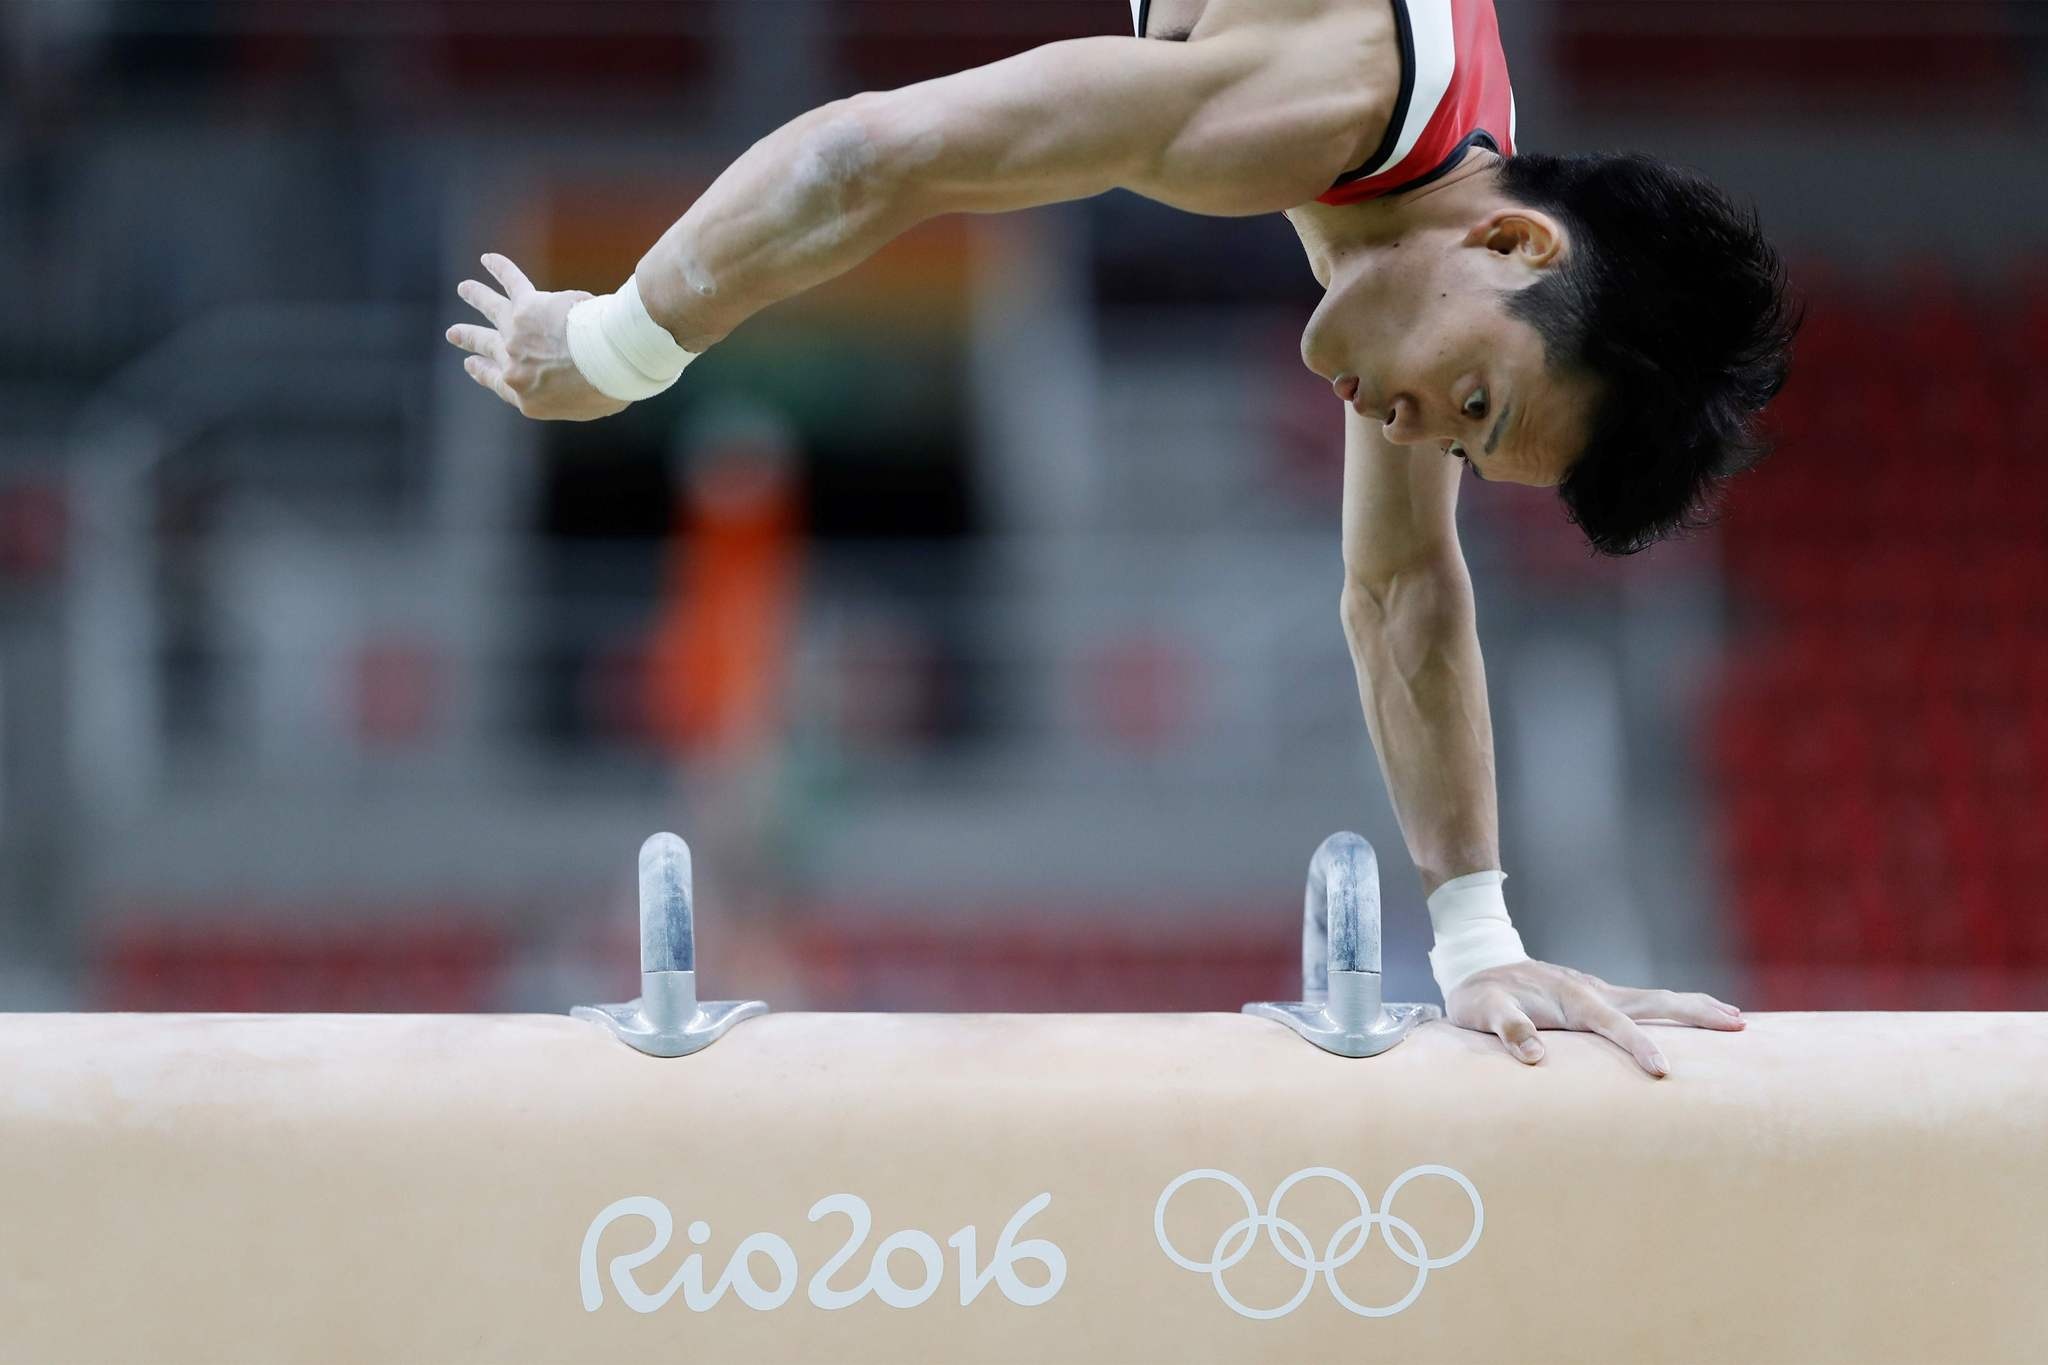 Pommel Horse (Gymnastics): Japanese gymnast, Olympic Arena, 2016, Handstand. 2050x1370 HD Background.